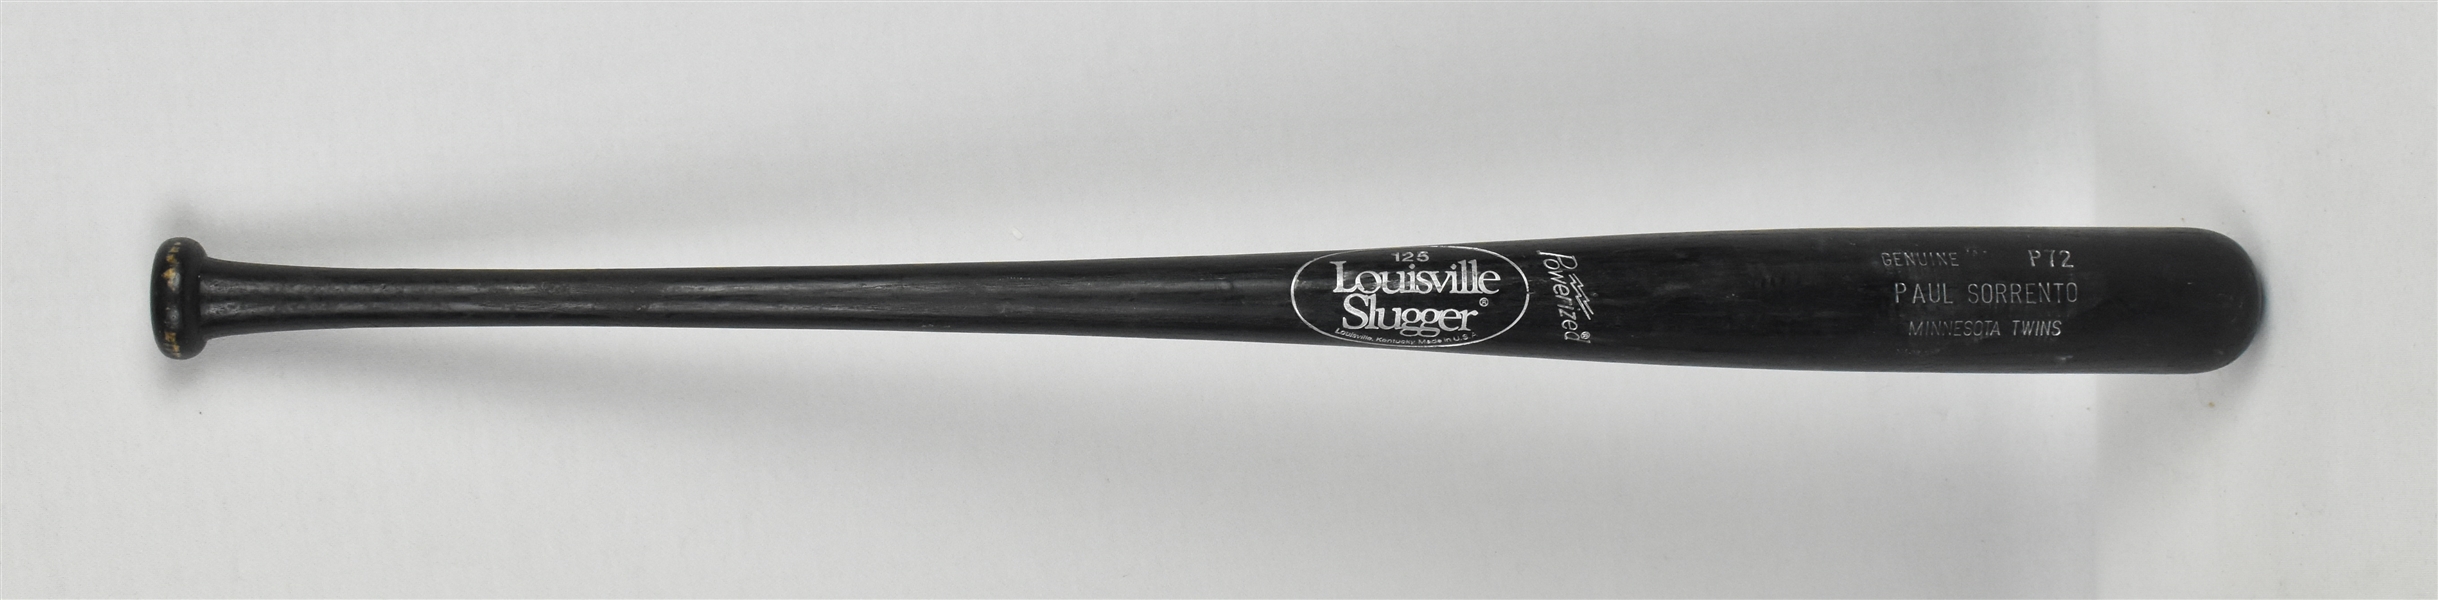 Paul Sorrento Minnesota Twins Game Used Bat